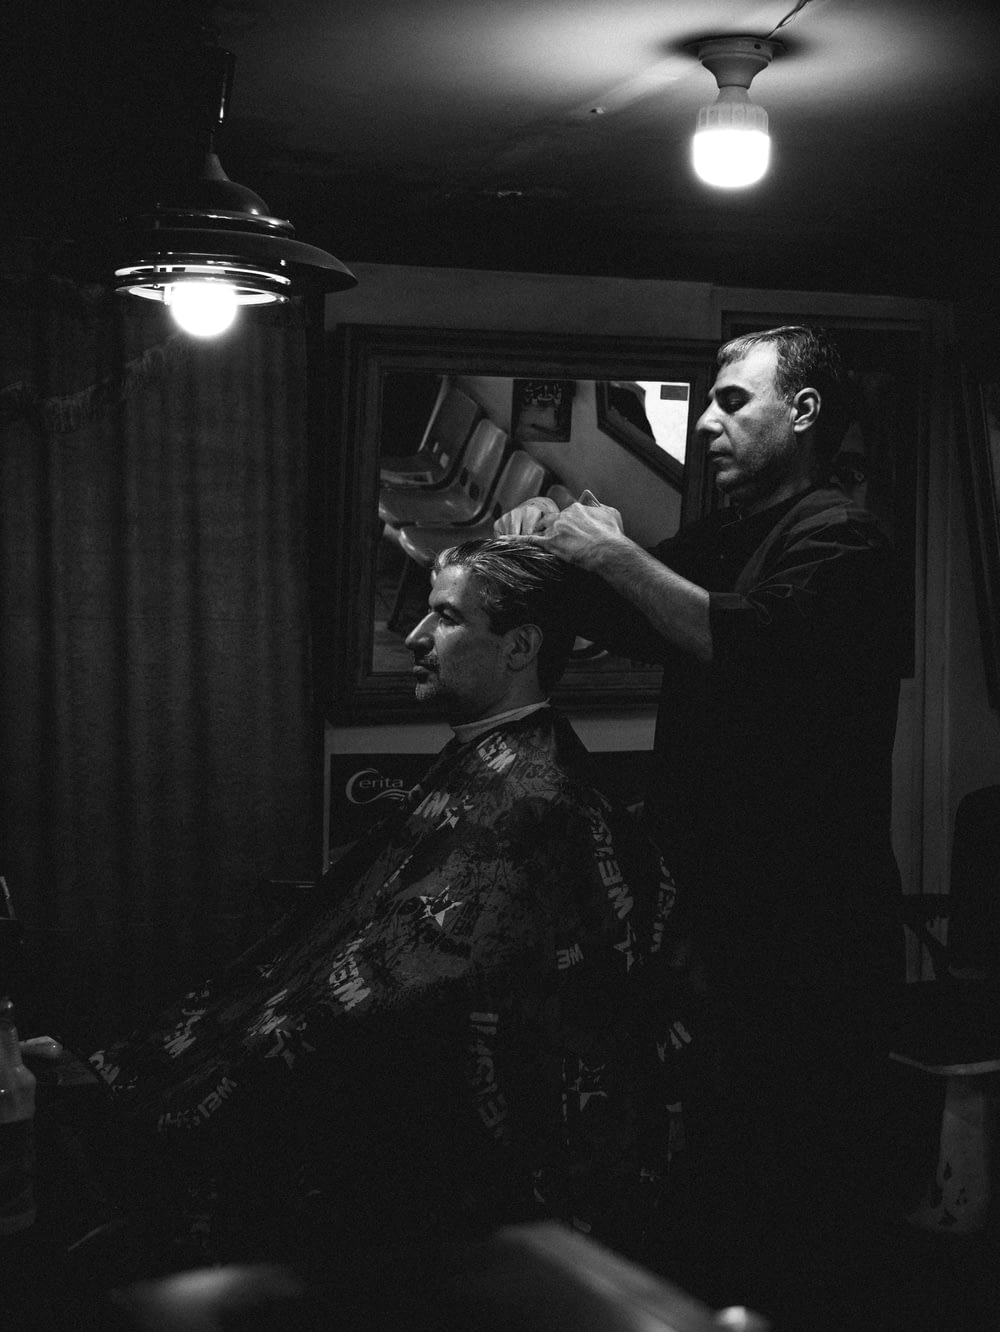 a man cutting another man's hair